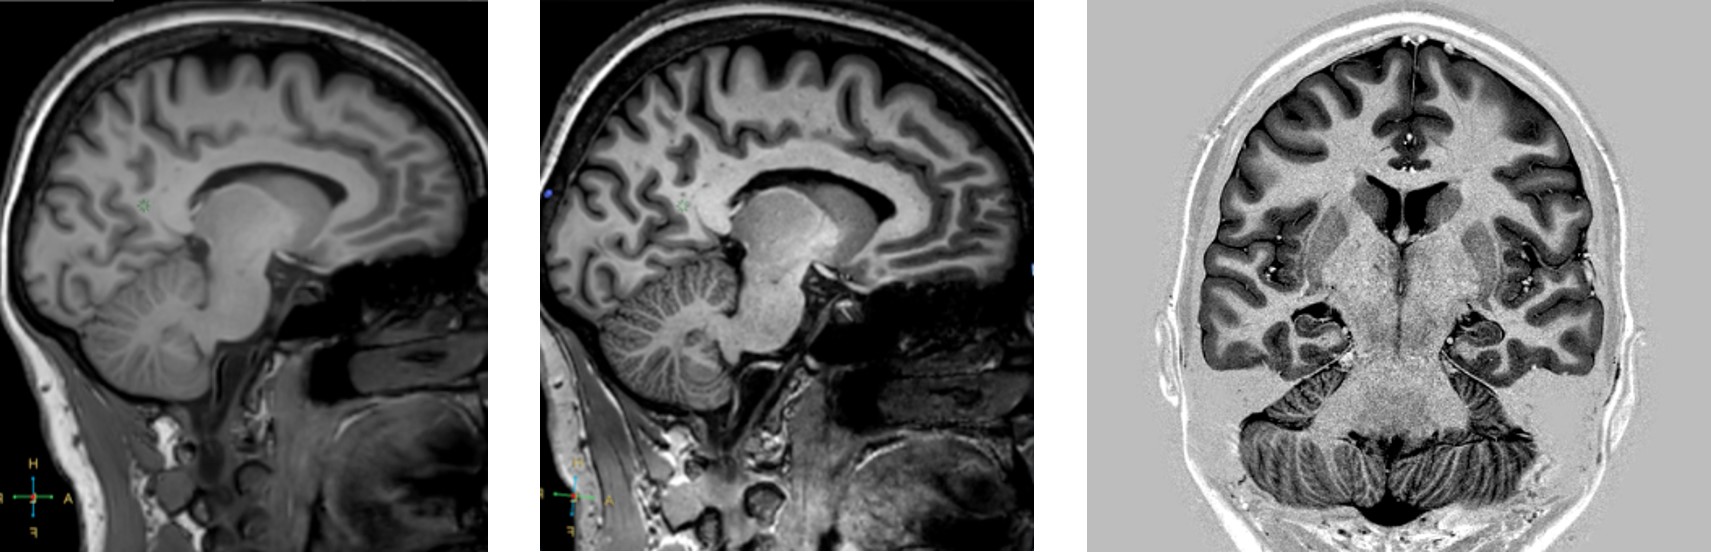 resonancia magnetica cerebral imagenes anatomicas-1